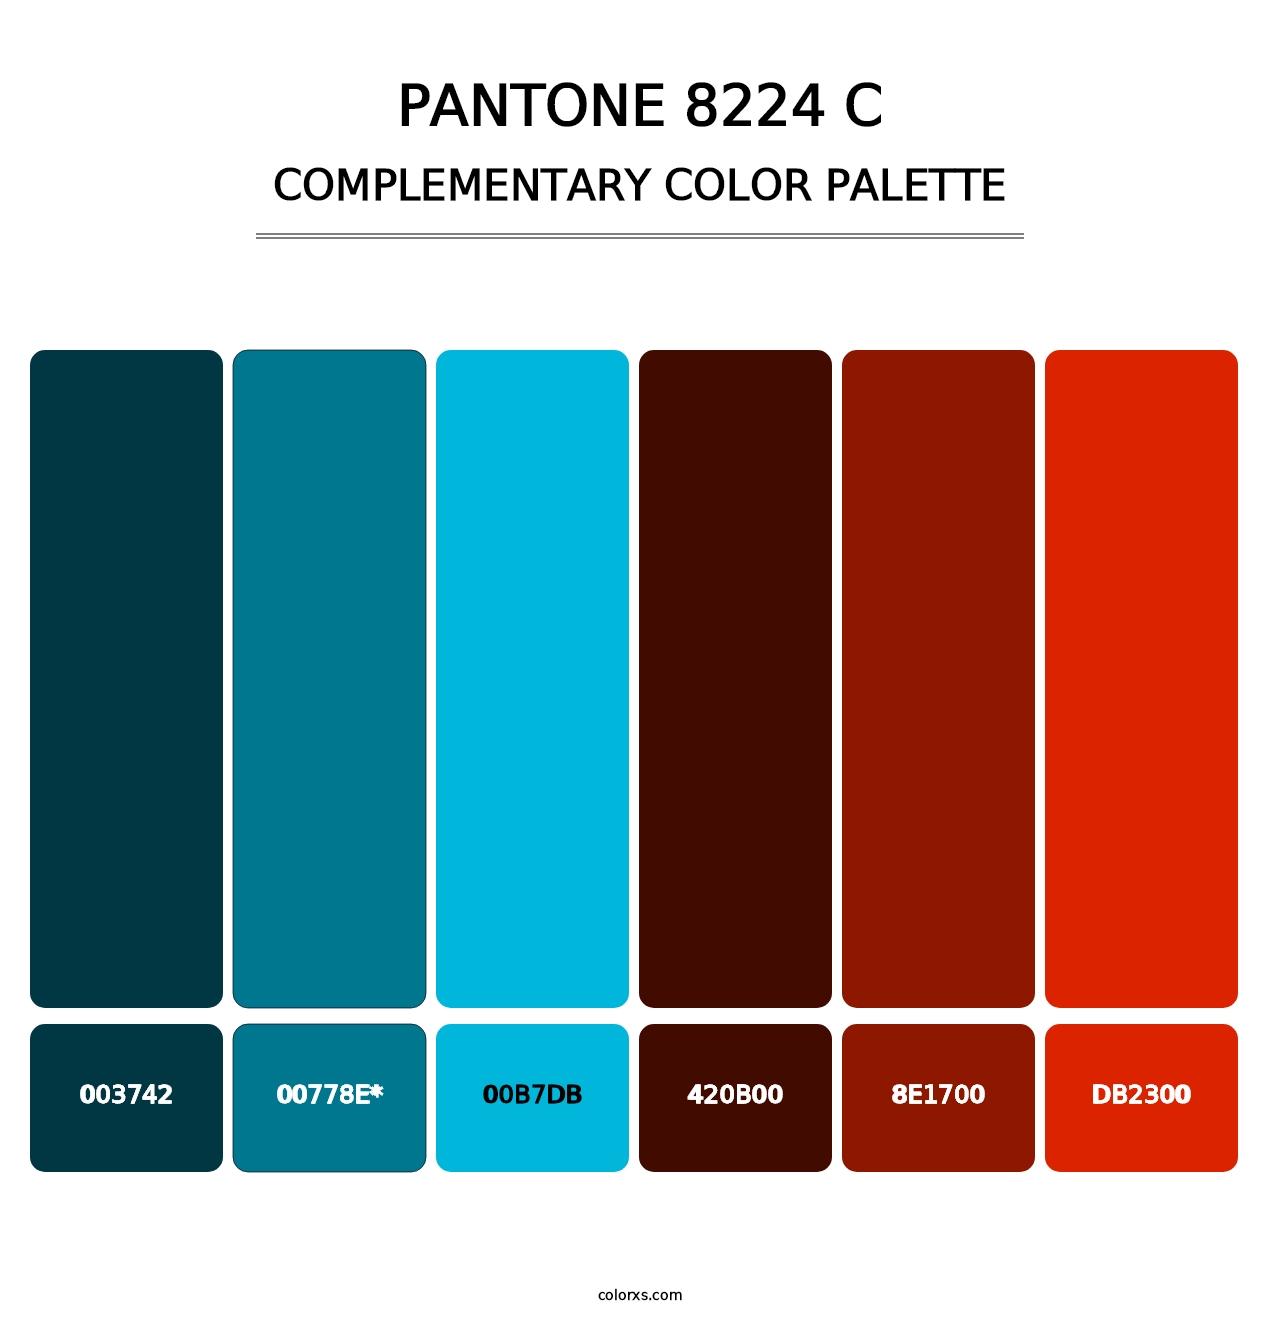 PANTONE 8224 C - Complementary Color Palette